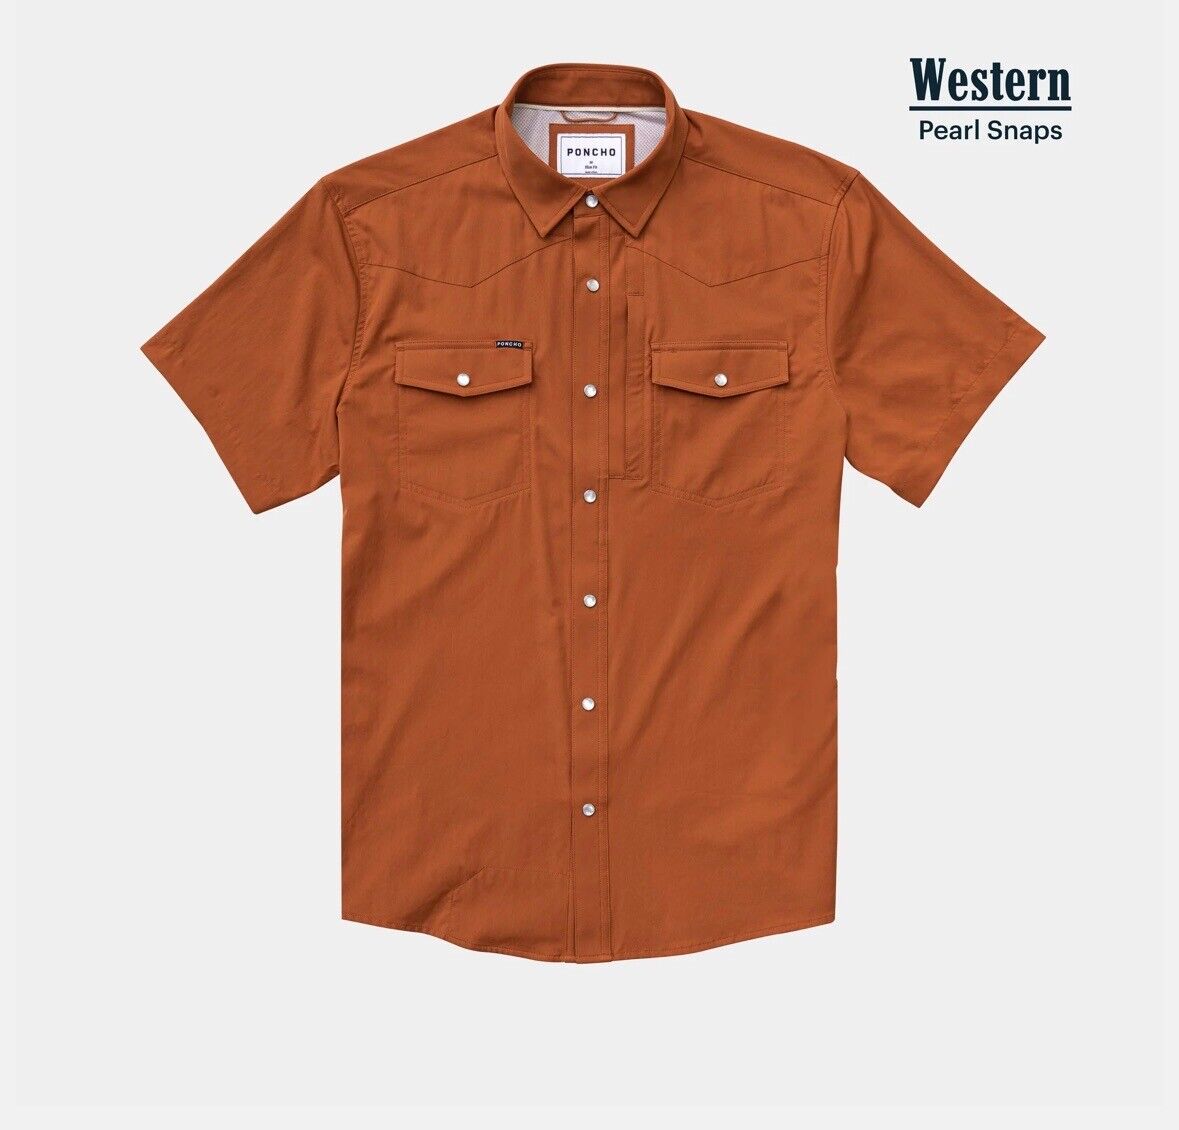 The 1969 XL Burnt Orange Poncho Outdoors Shirt